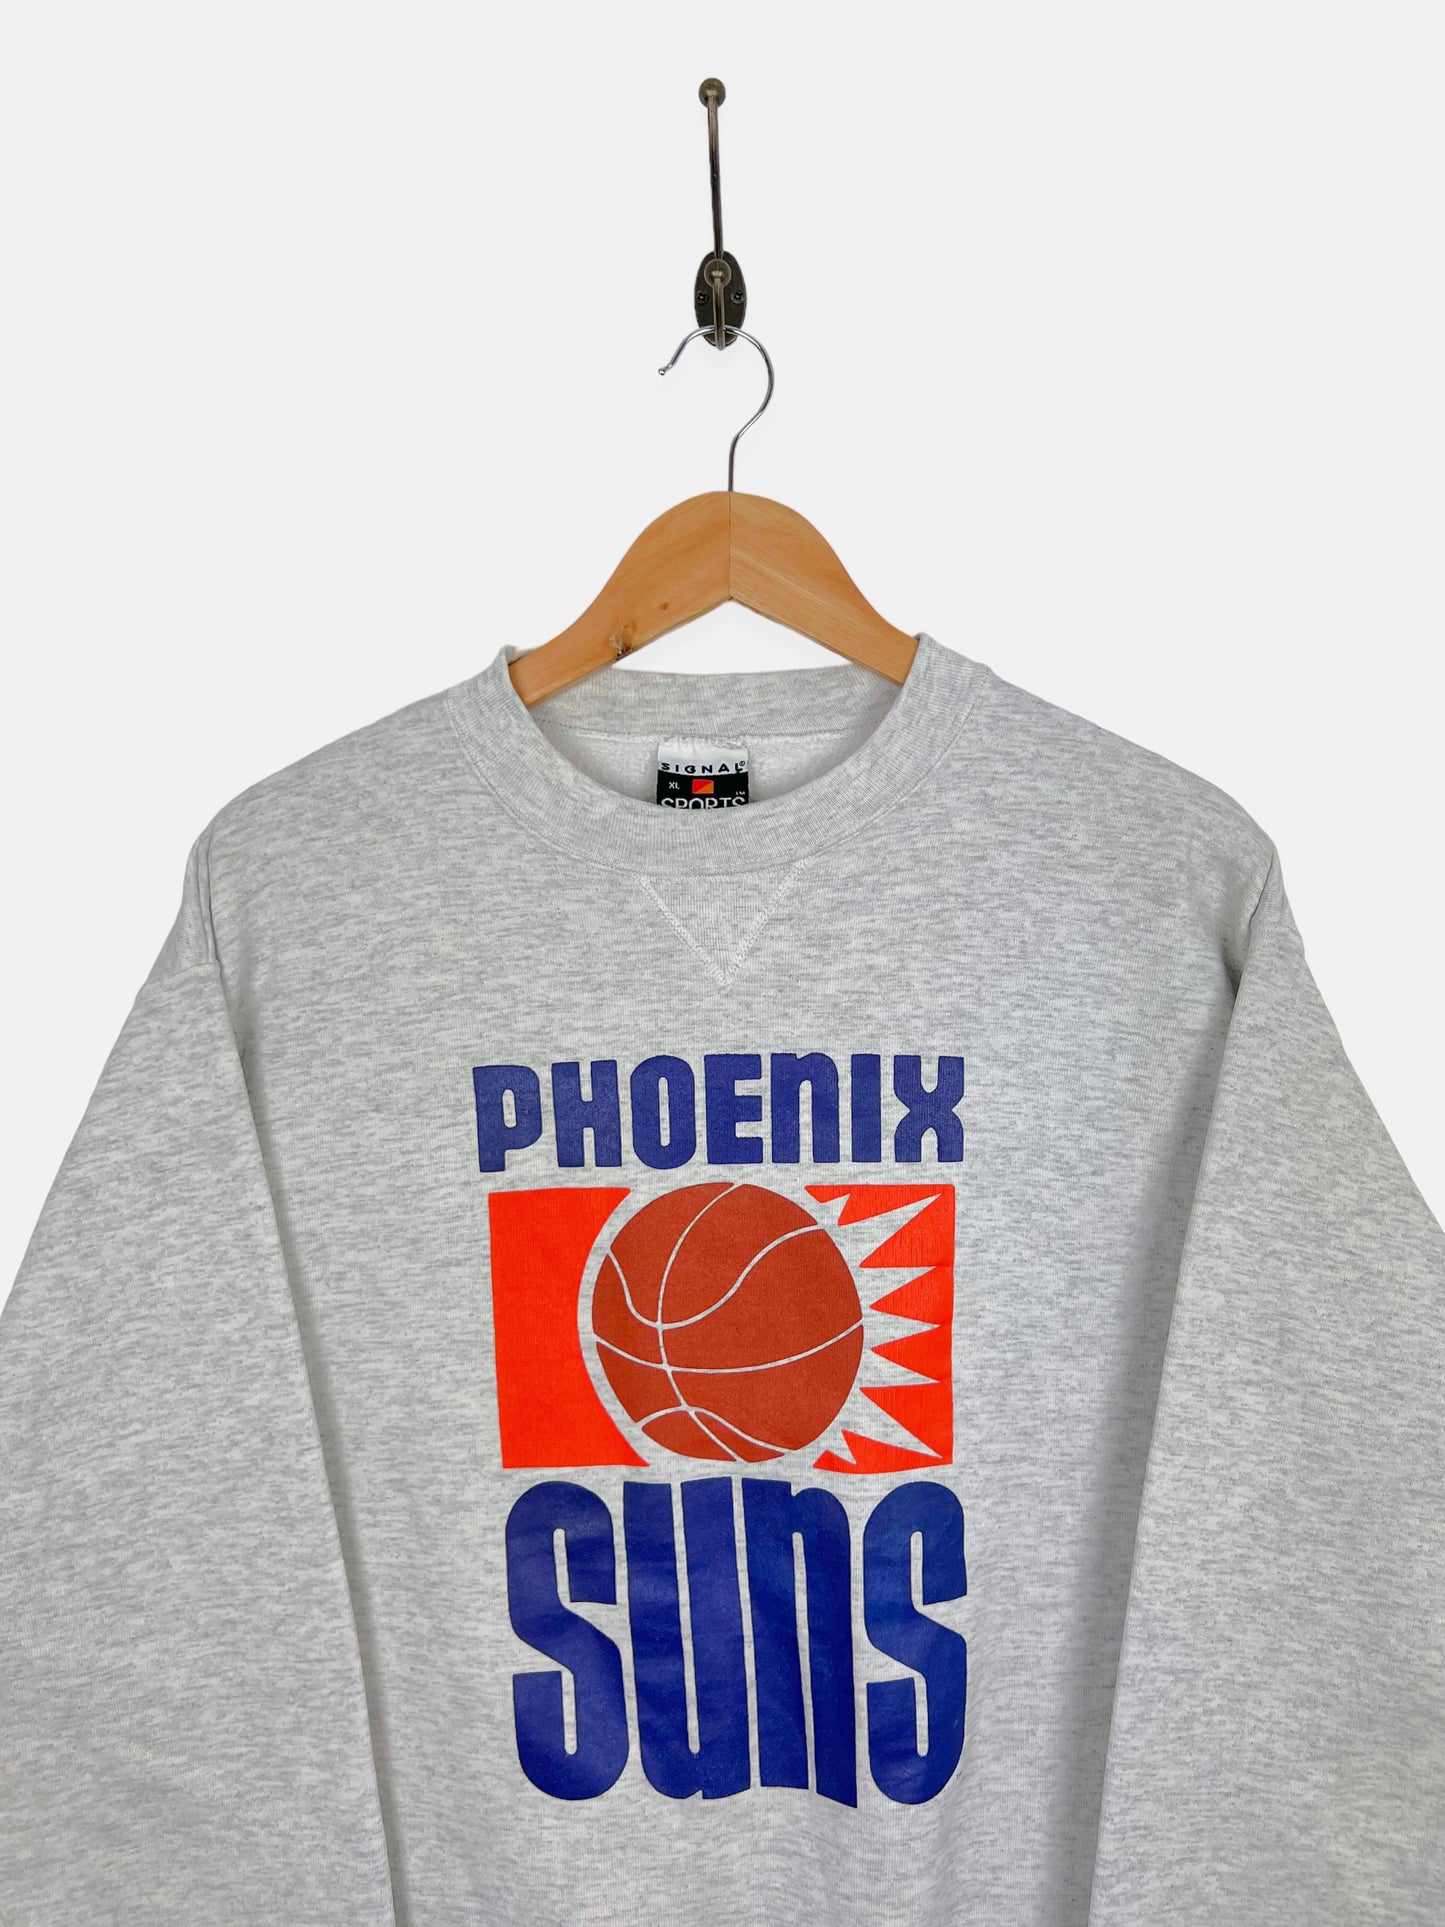 90's Phoenix Suns NBA USA Made Vintage Sweatshirt Size 8-10